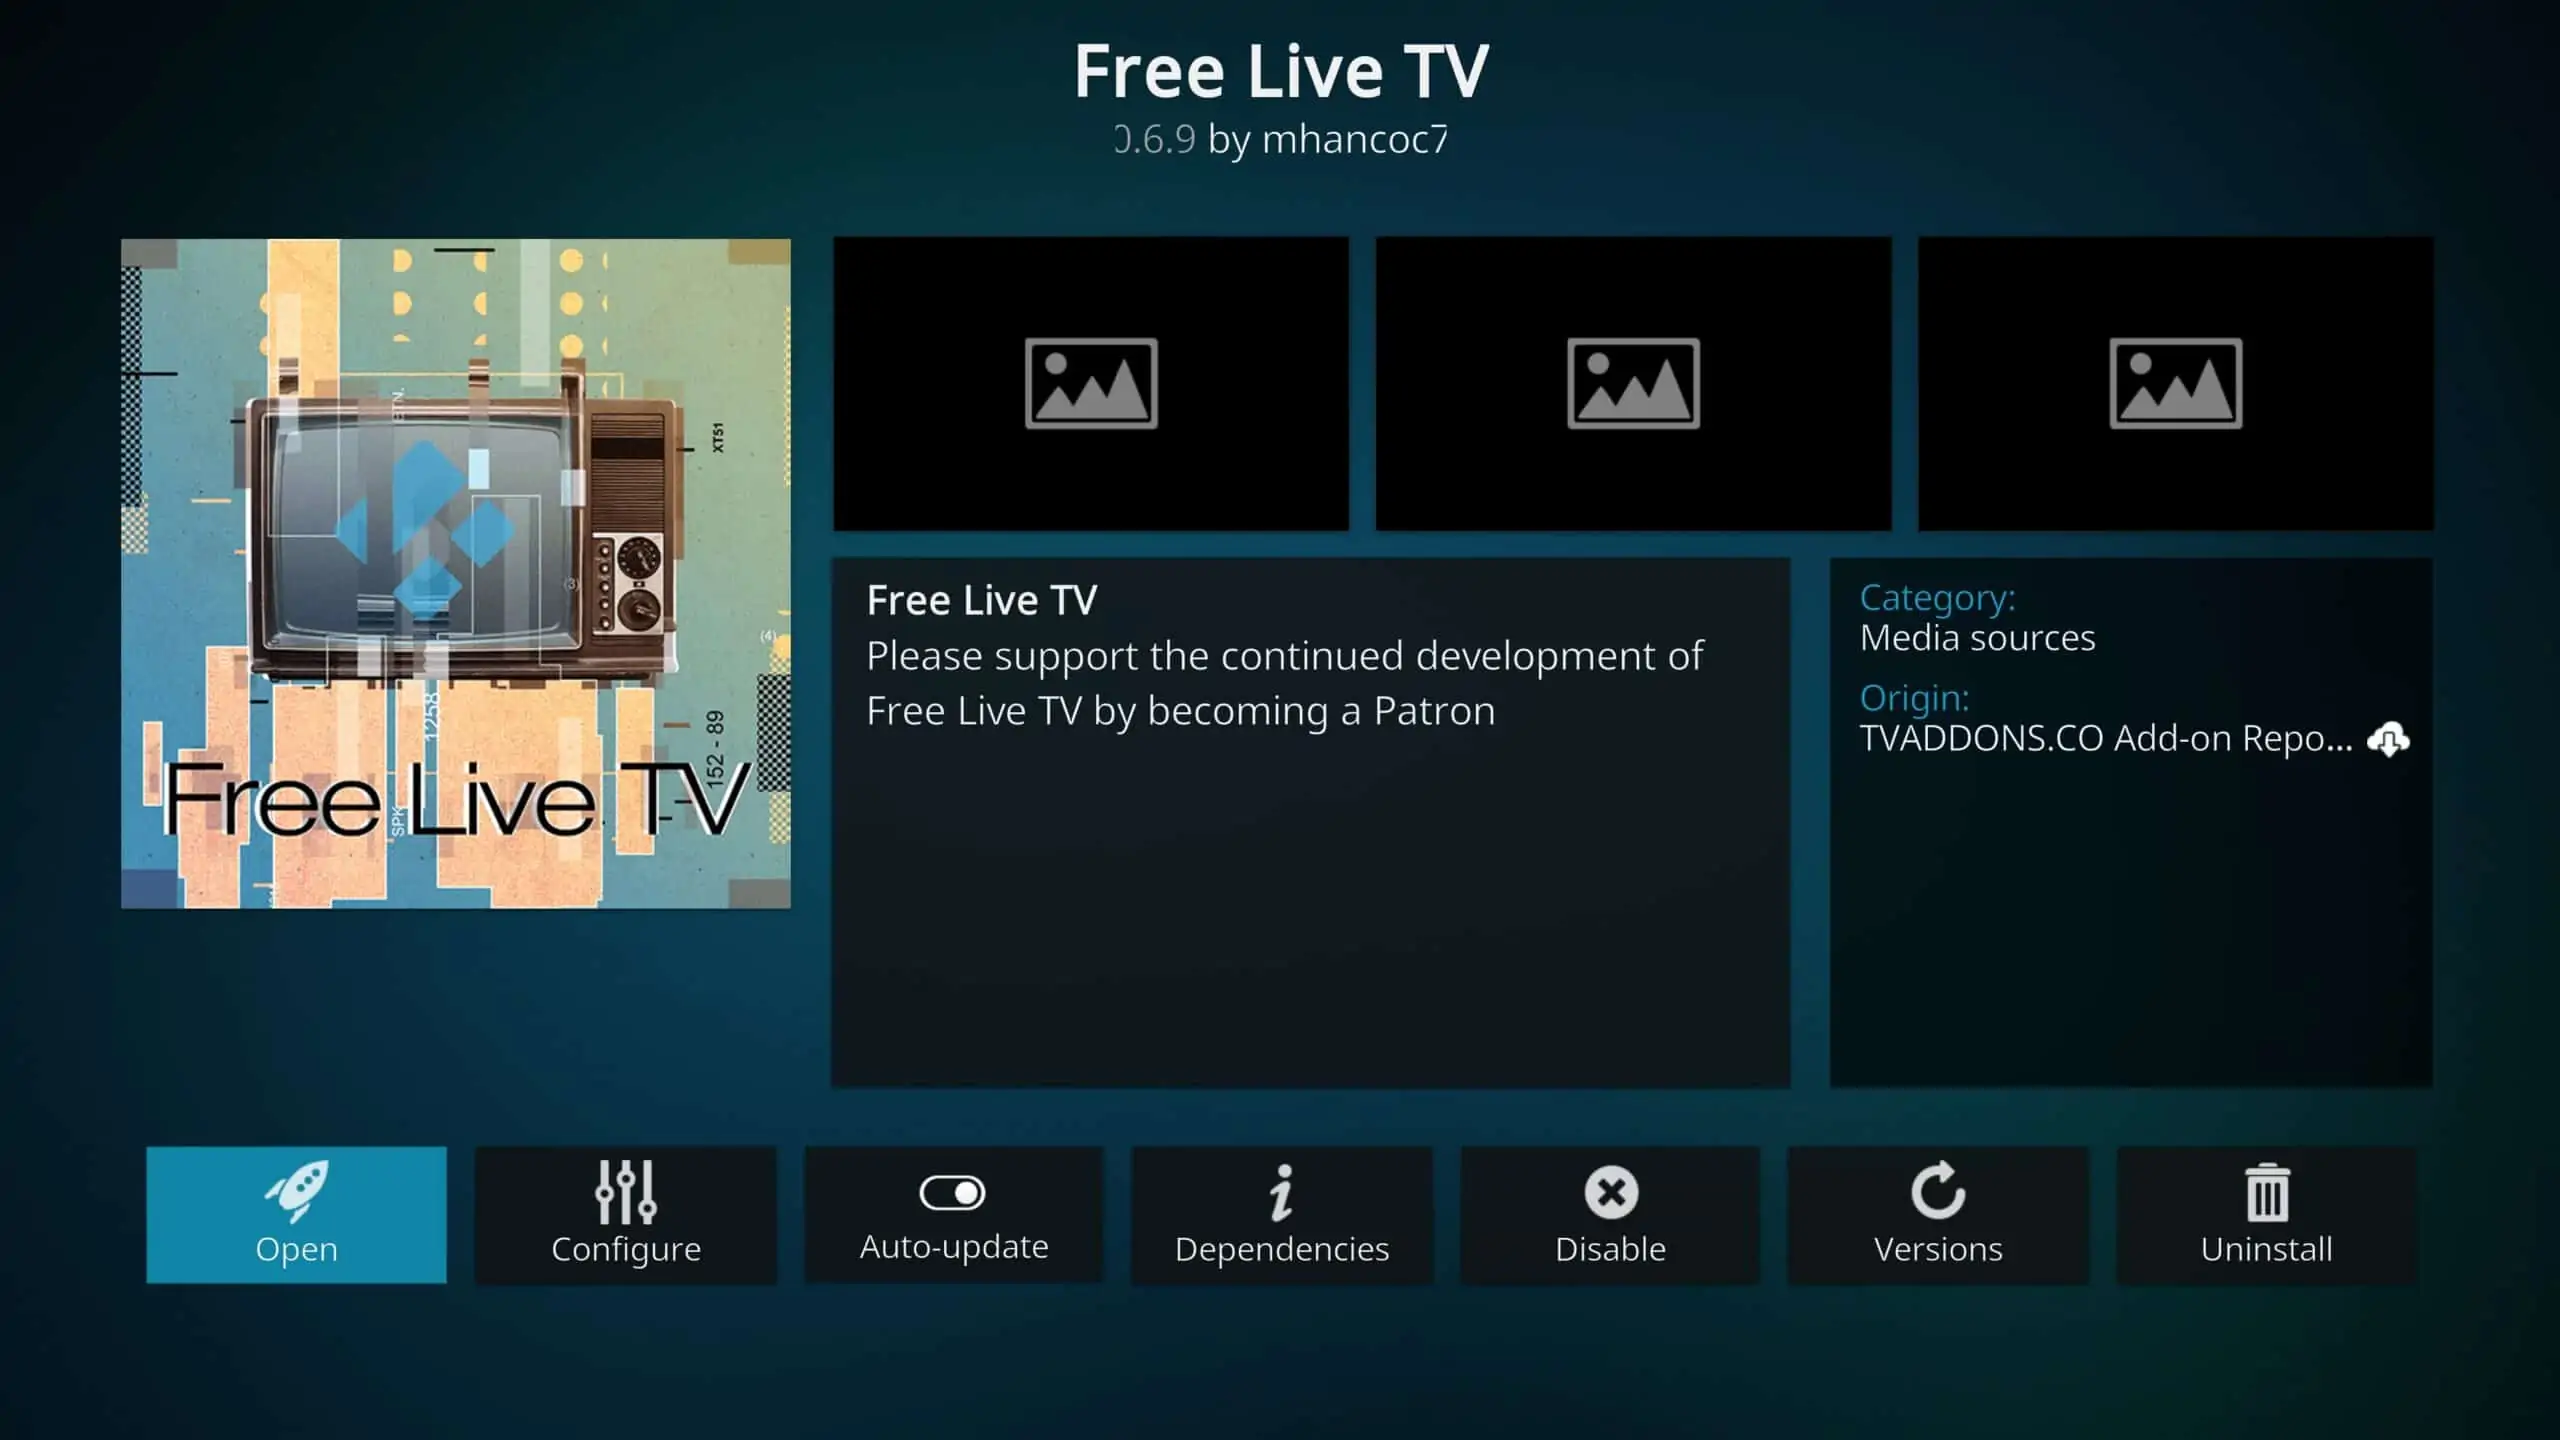 Free live TV